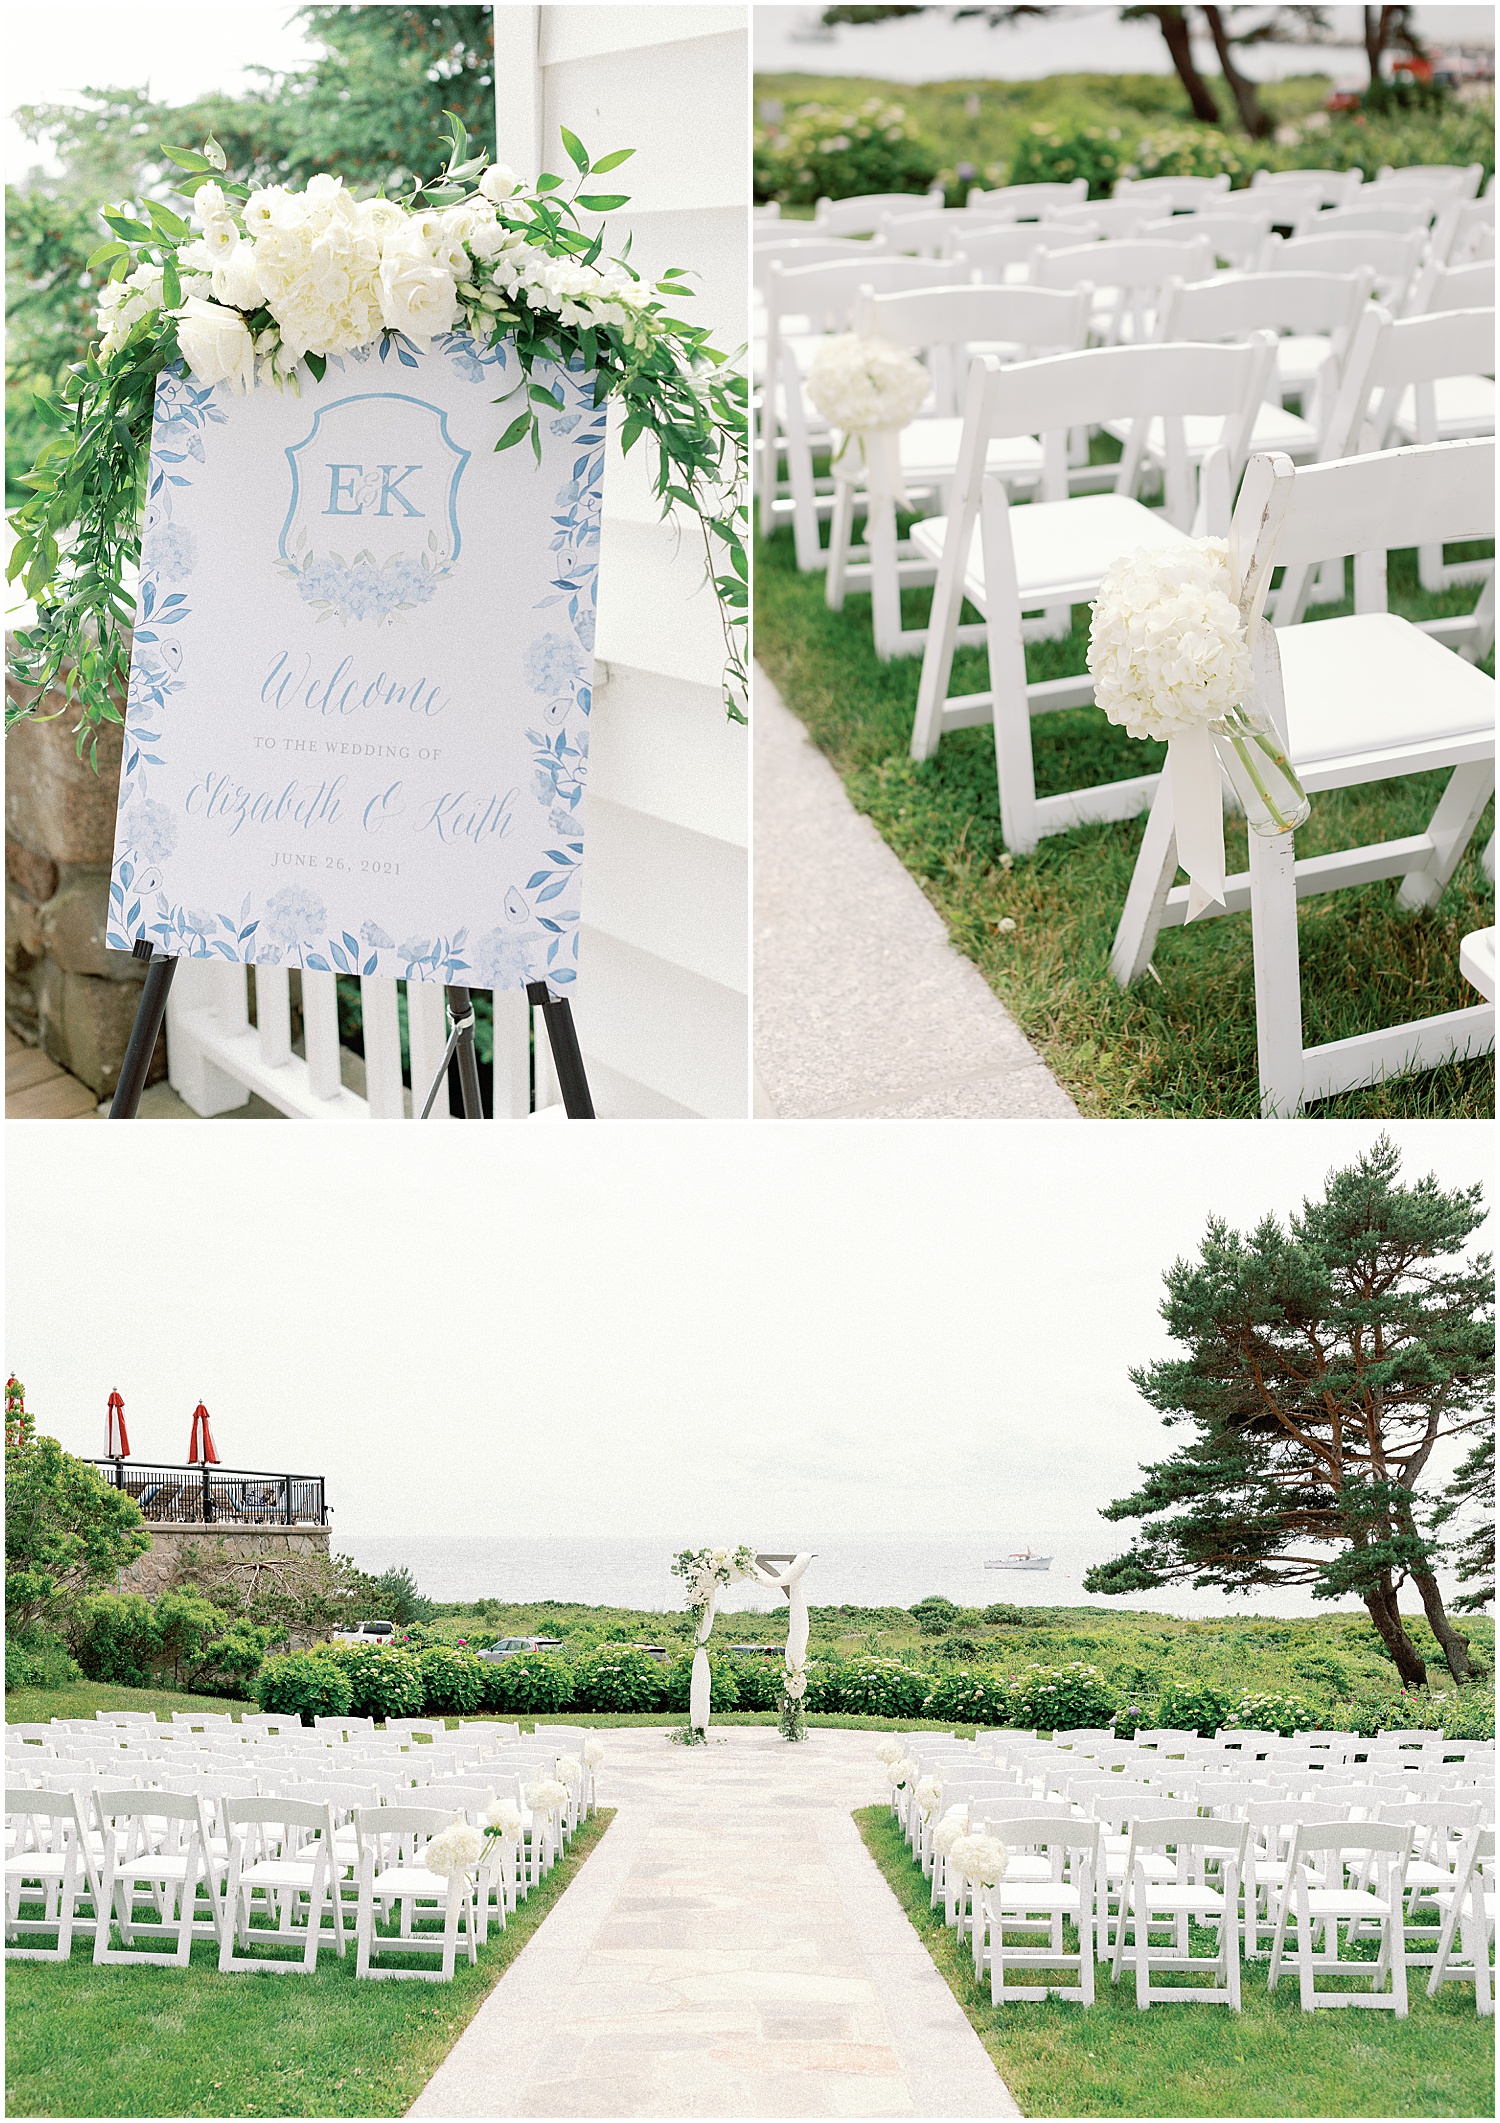 kennebunkport wedding ceremony decor by minka floral design and mulberry & elm